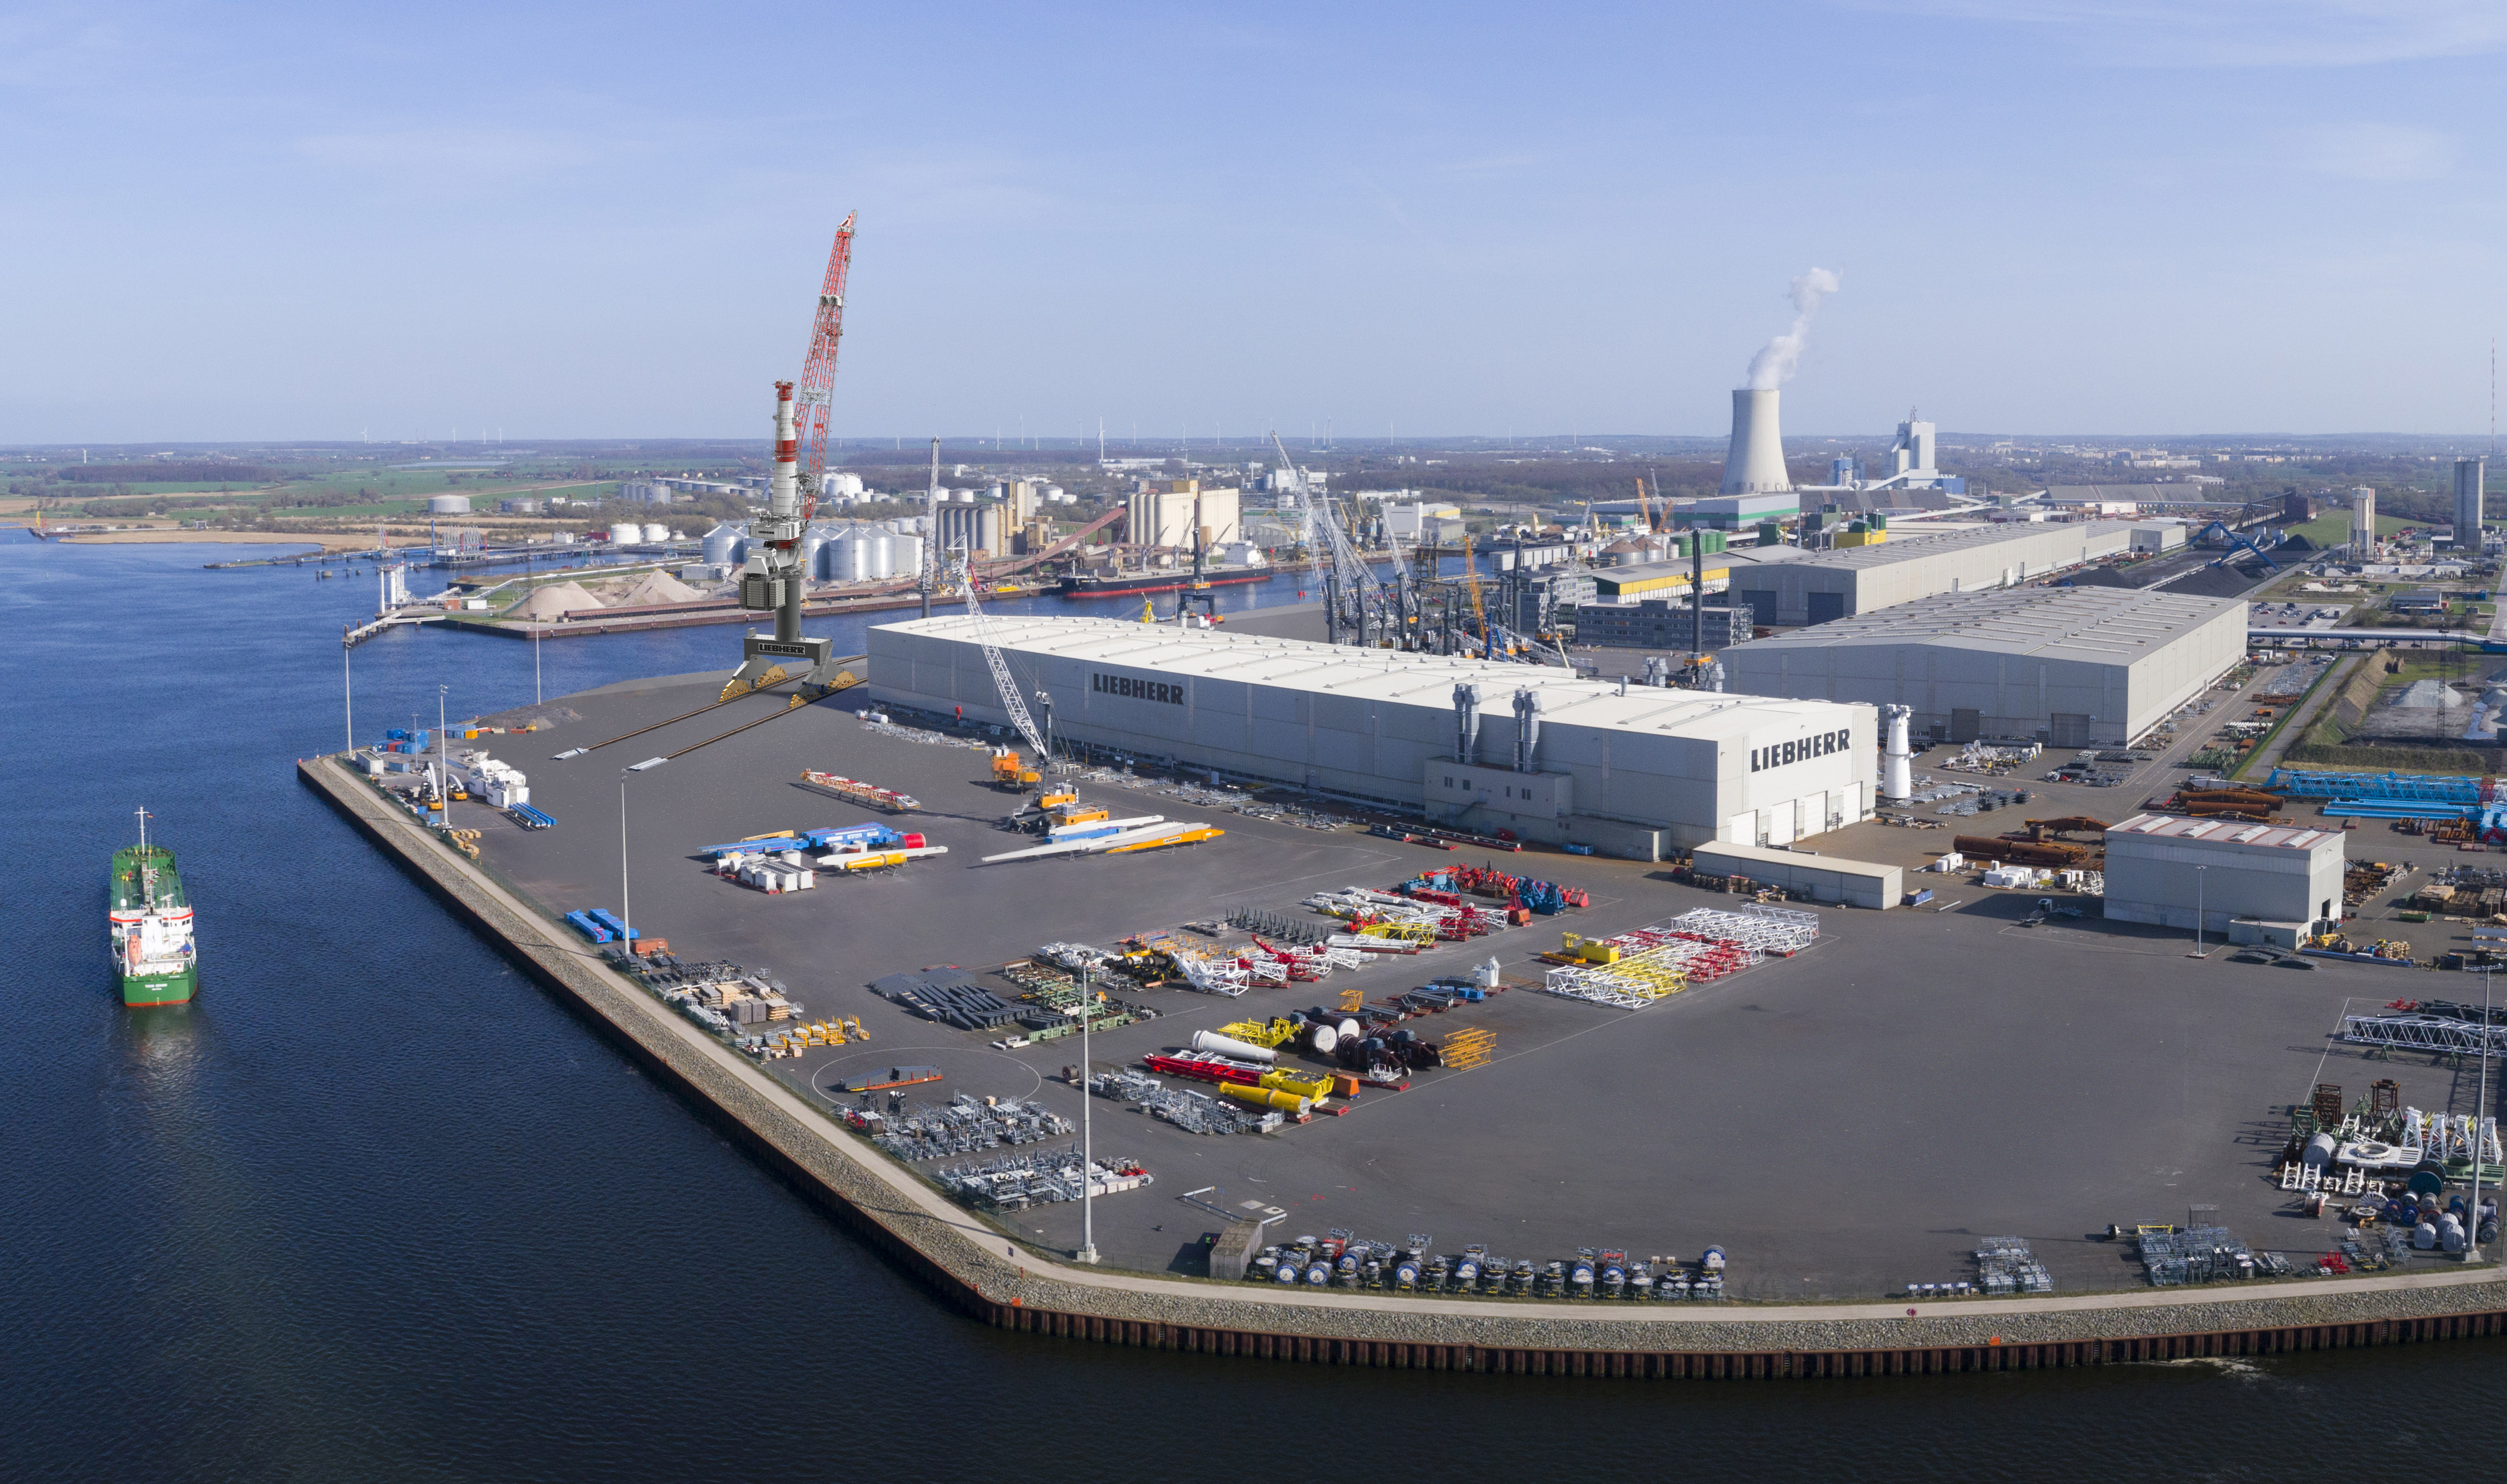 Superlative Liebherr heavy lift crane for the Port of Rostock